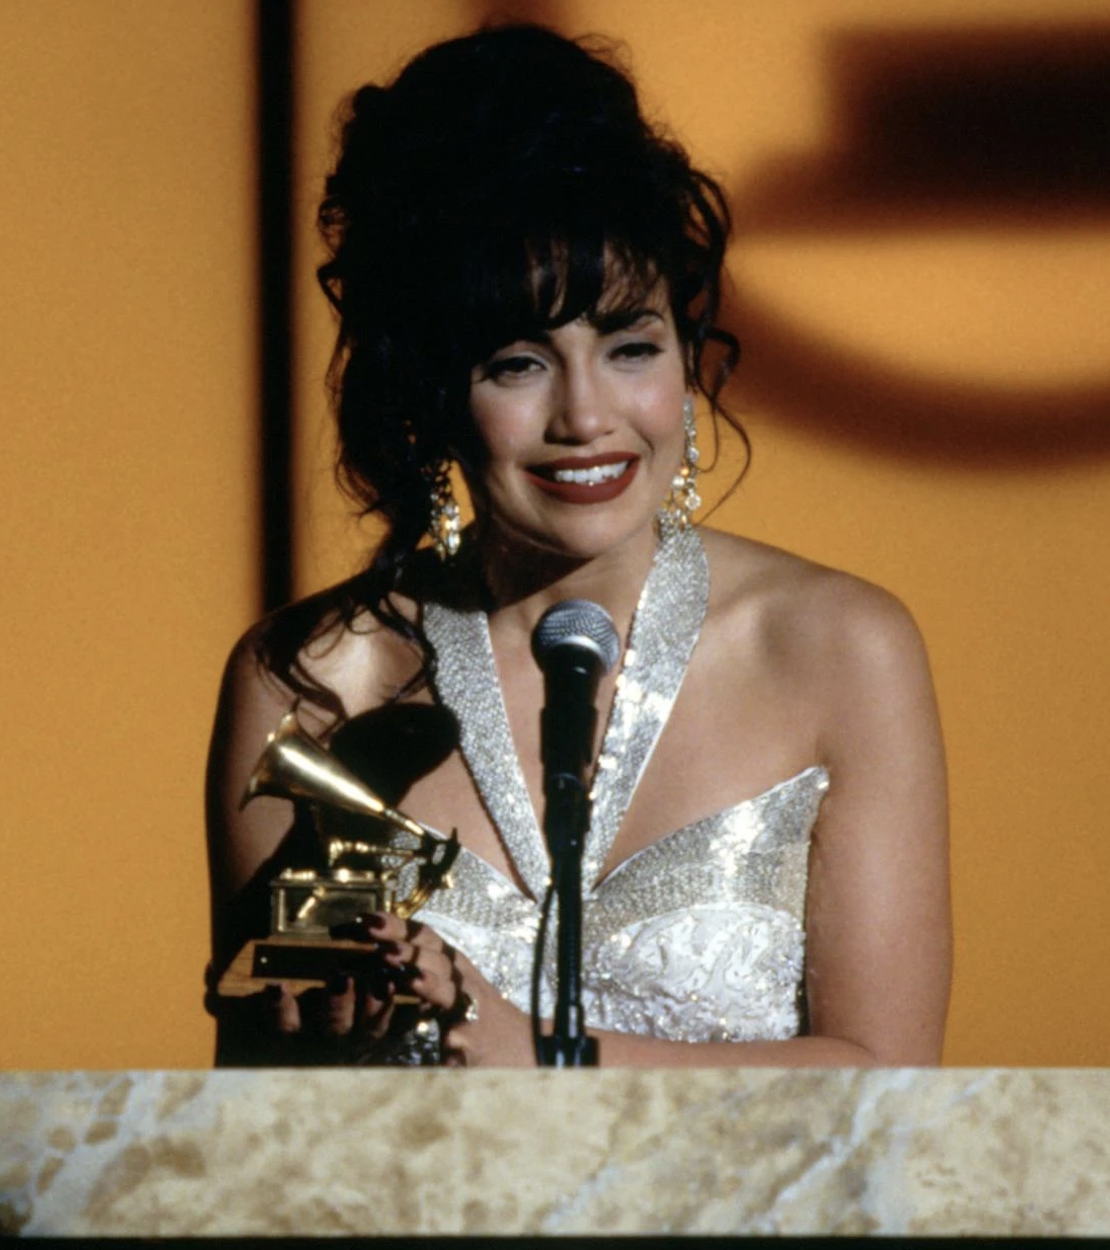 Jennifer Lopez as Selena, accepting a Grammy award